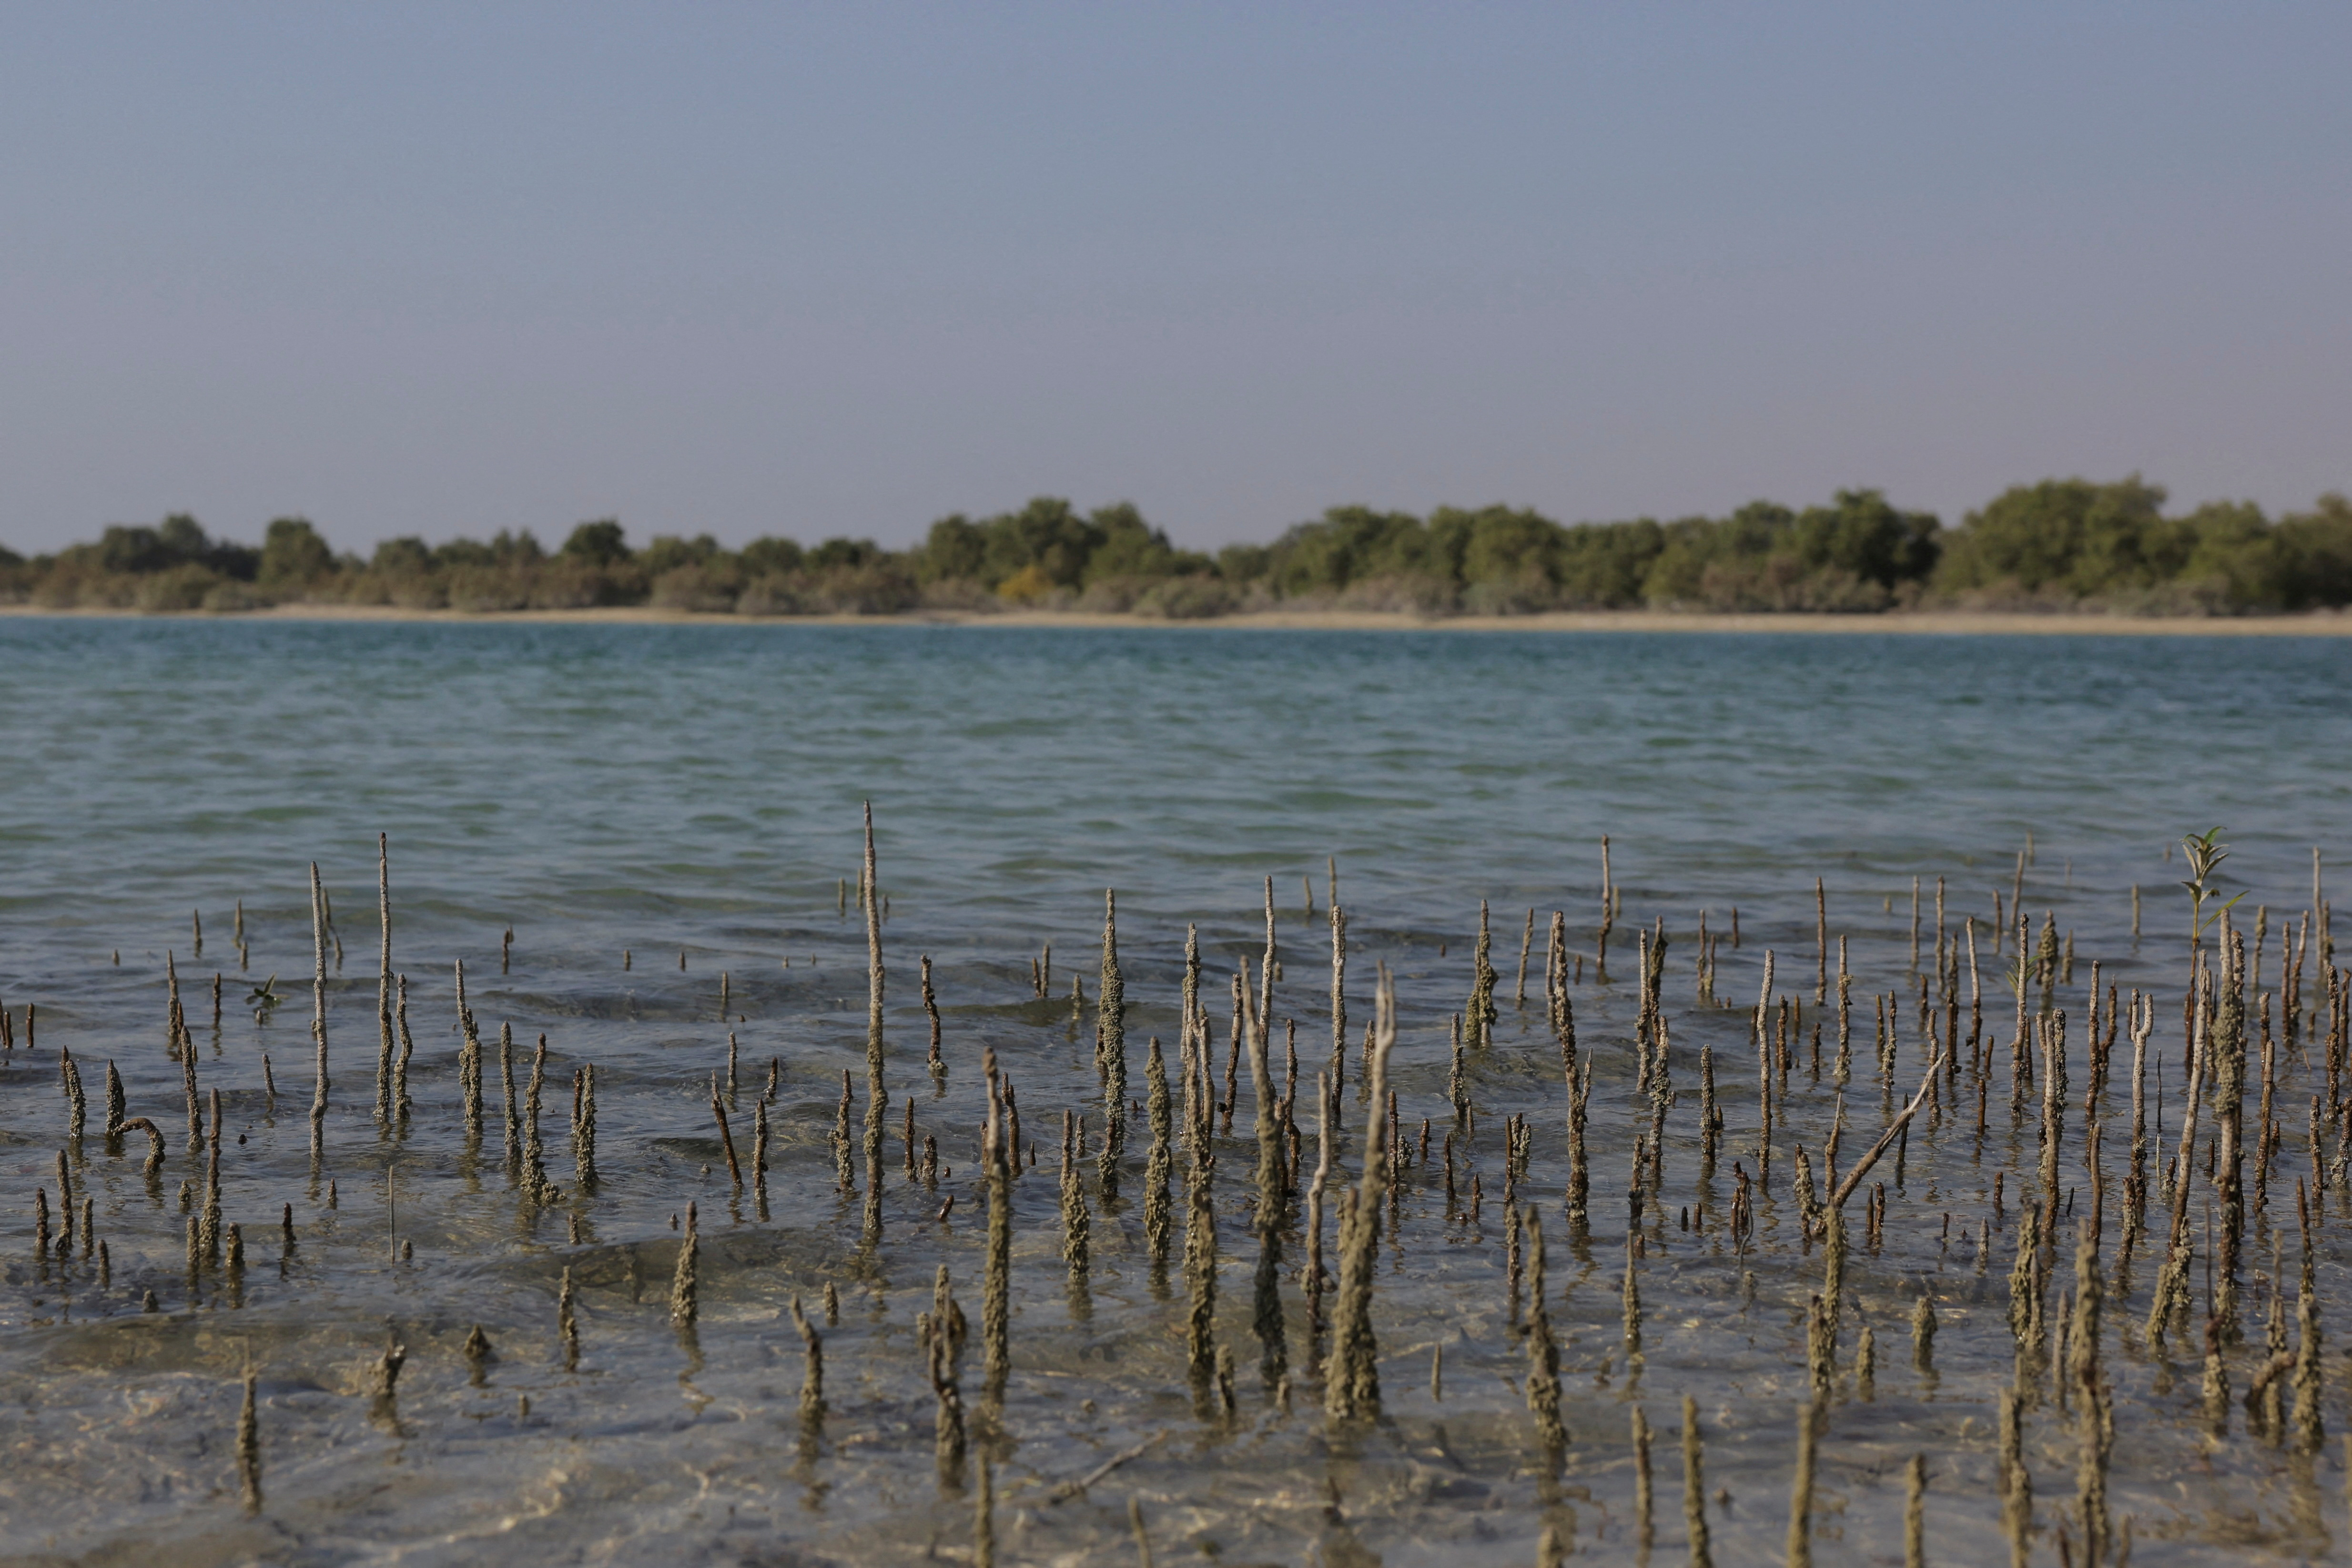 United Arab Emirates energy company Abu Dhabi National Oil Company (ADNOC) plants mangrove seedlings using flying drones in Abu Dhabi